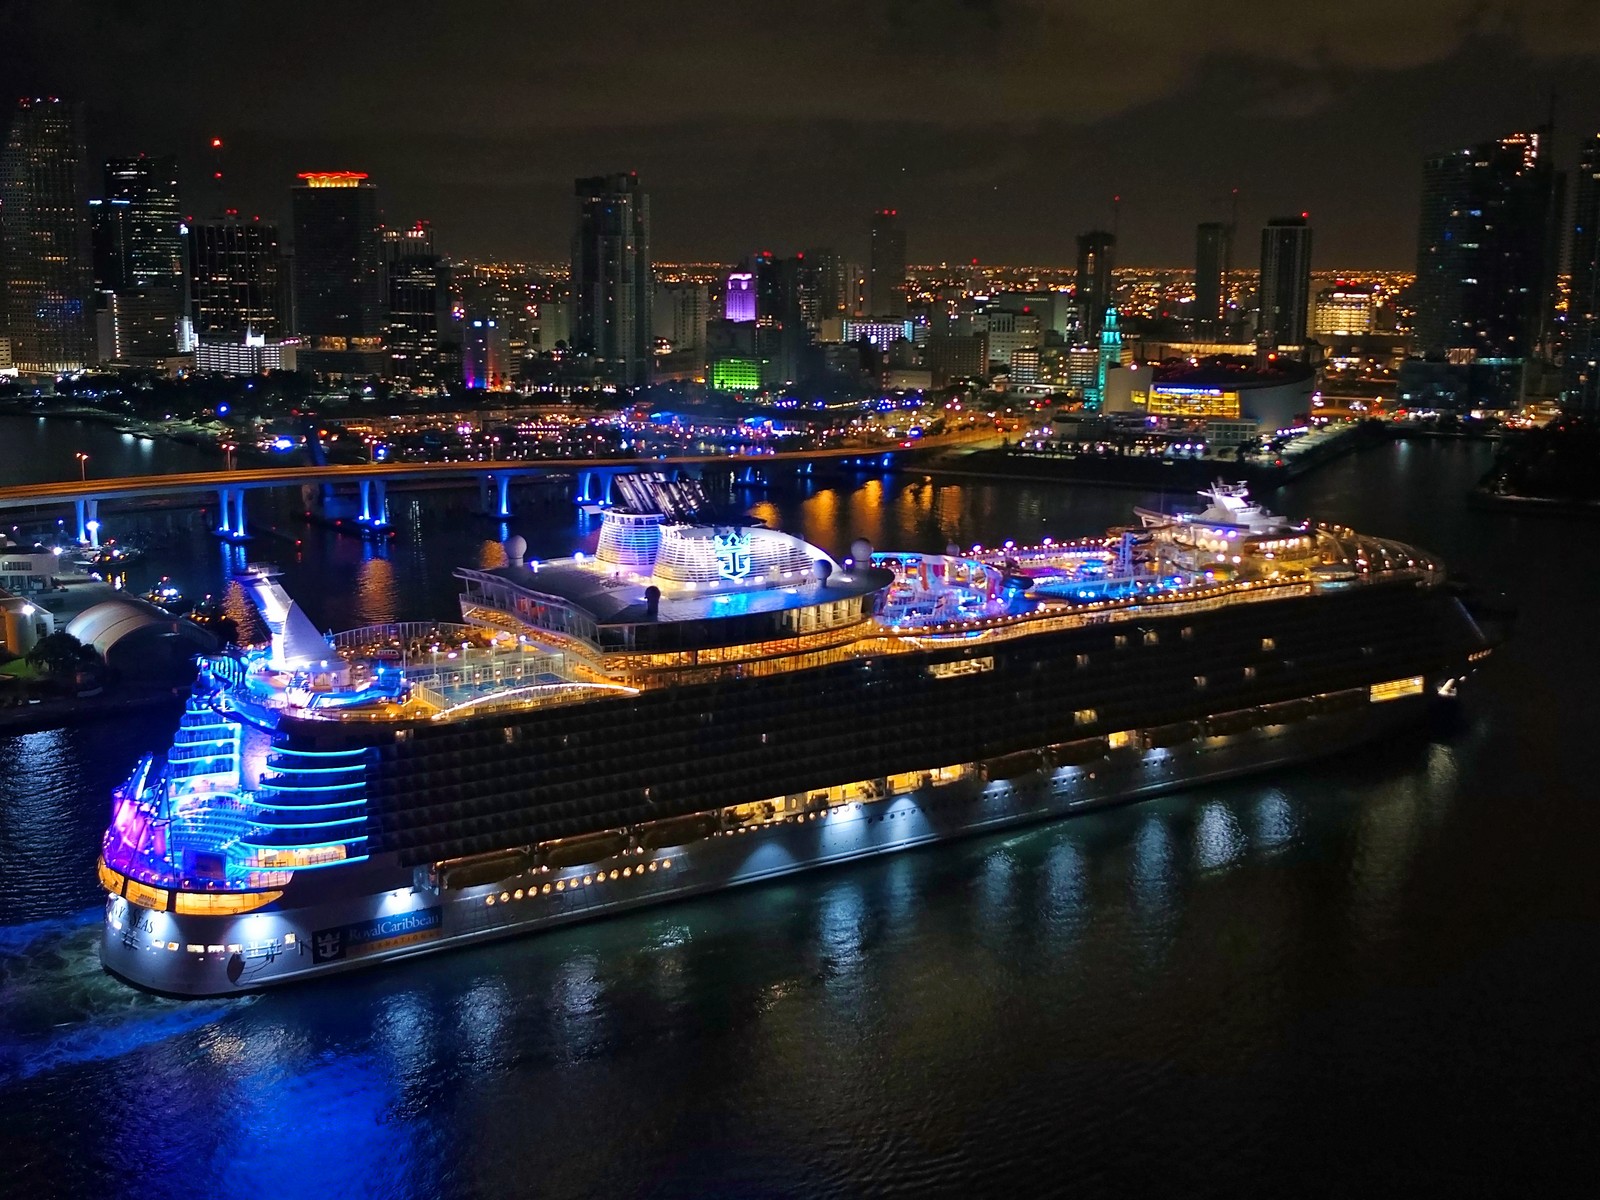 Symphony of the Seas night in Miami